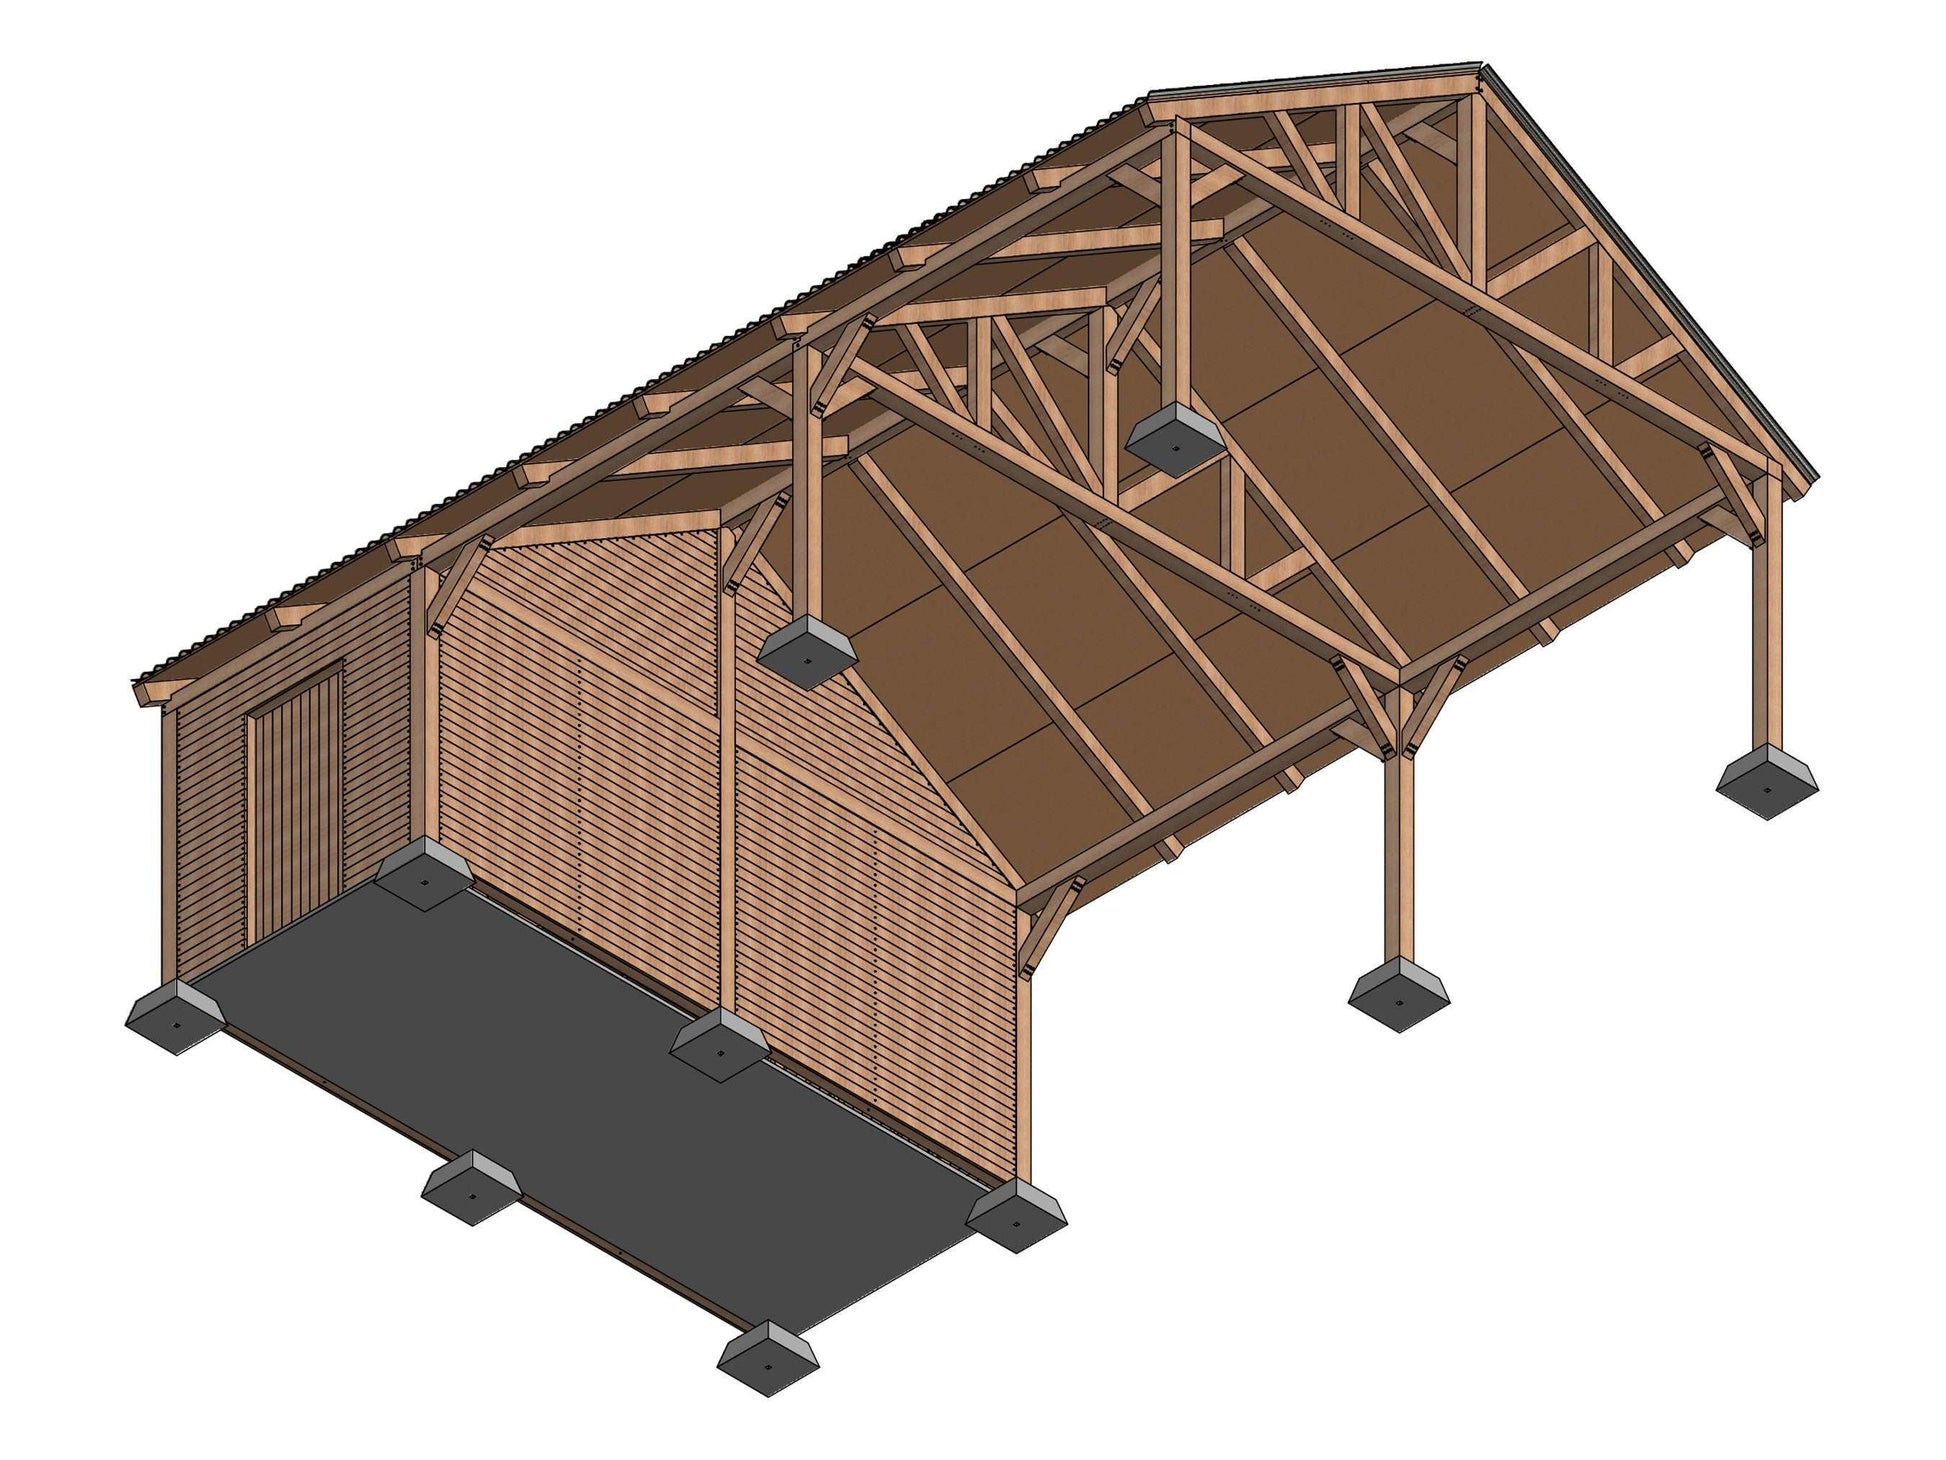 carport with storage plan ,  car garage build plan , Two car port plans ,  carport shed, build a carport, diy garage plans